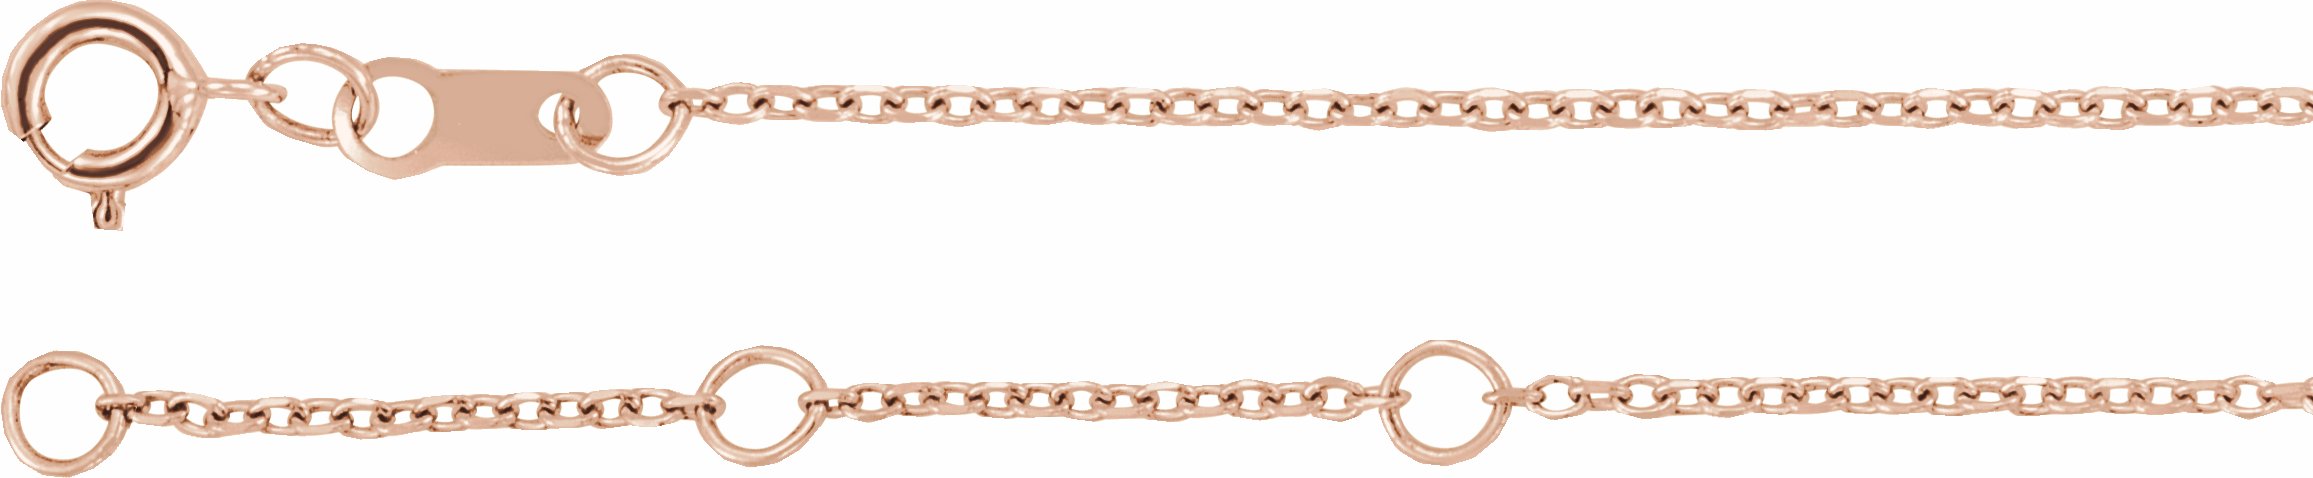 Rainbow Multi-Gemstone Bar Bracelet in 14K Rose Gold by Vintage Magnality